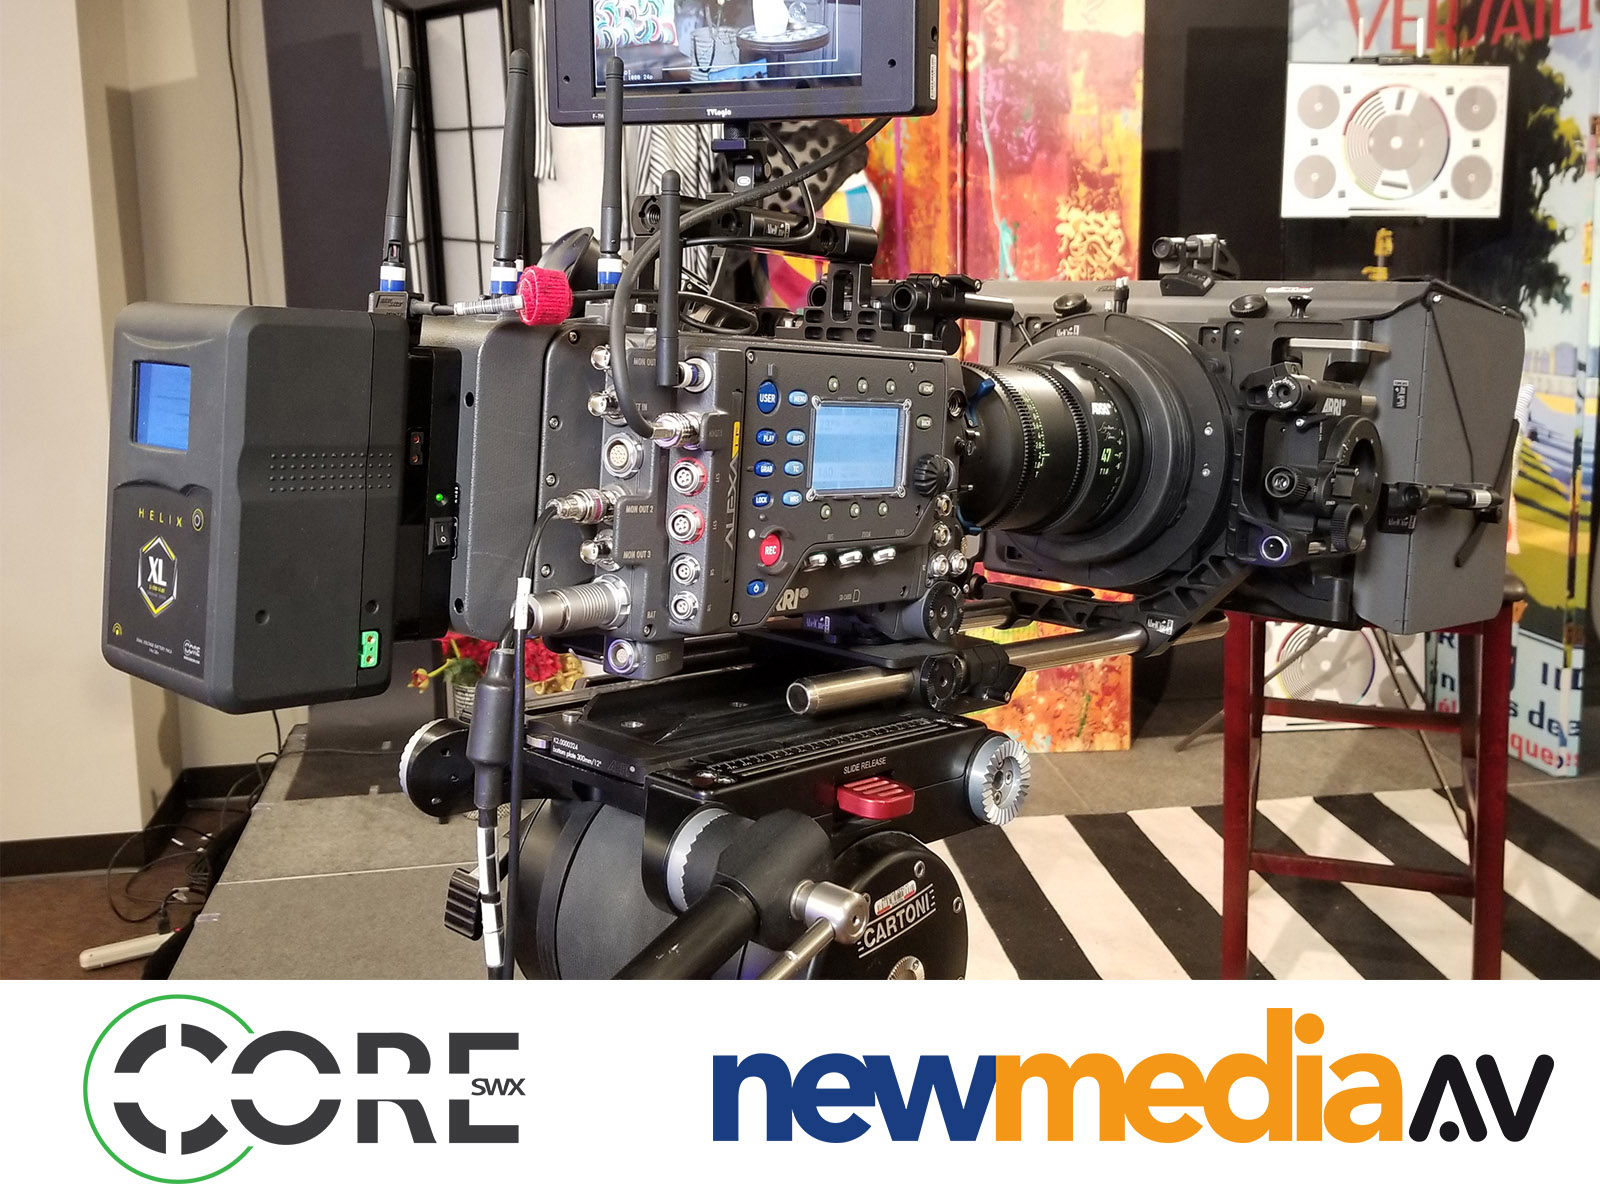 News - Central: New Media AV Core SWX